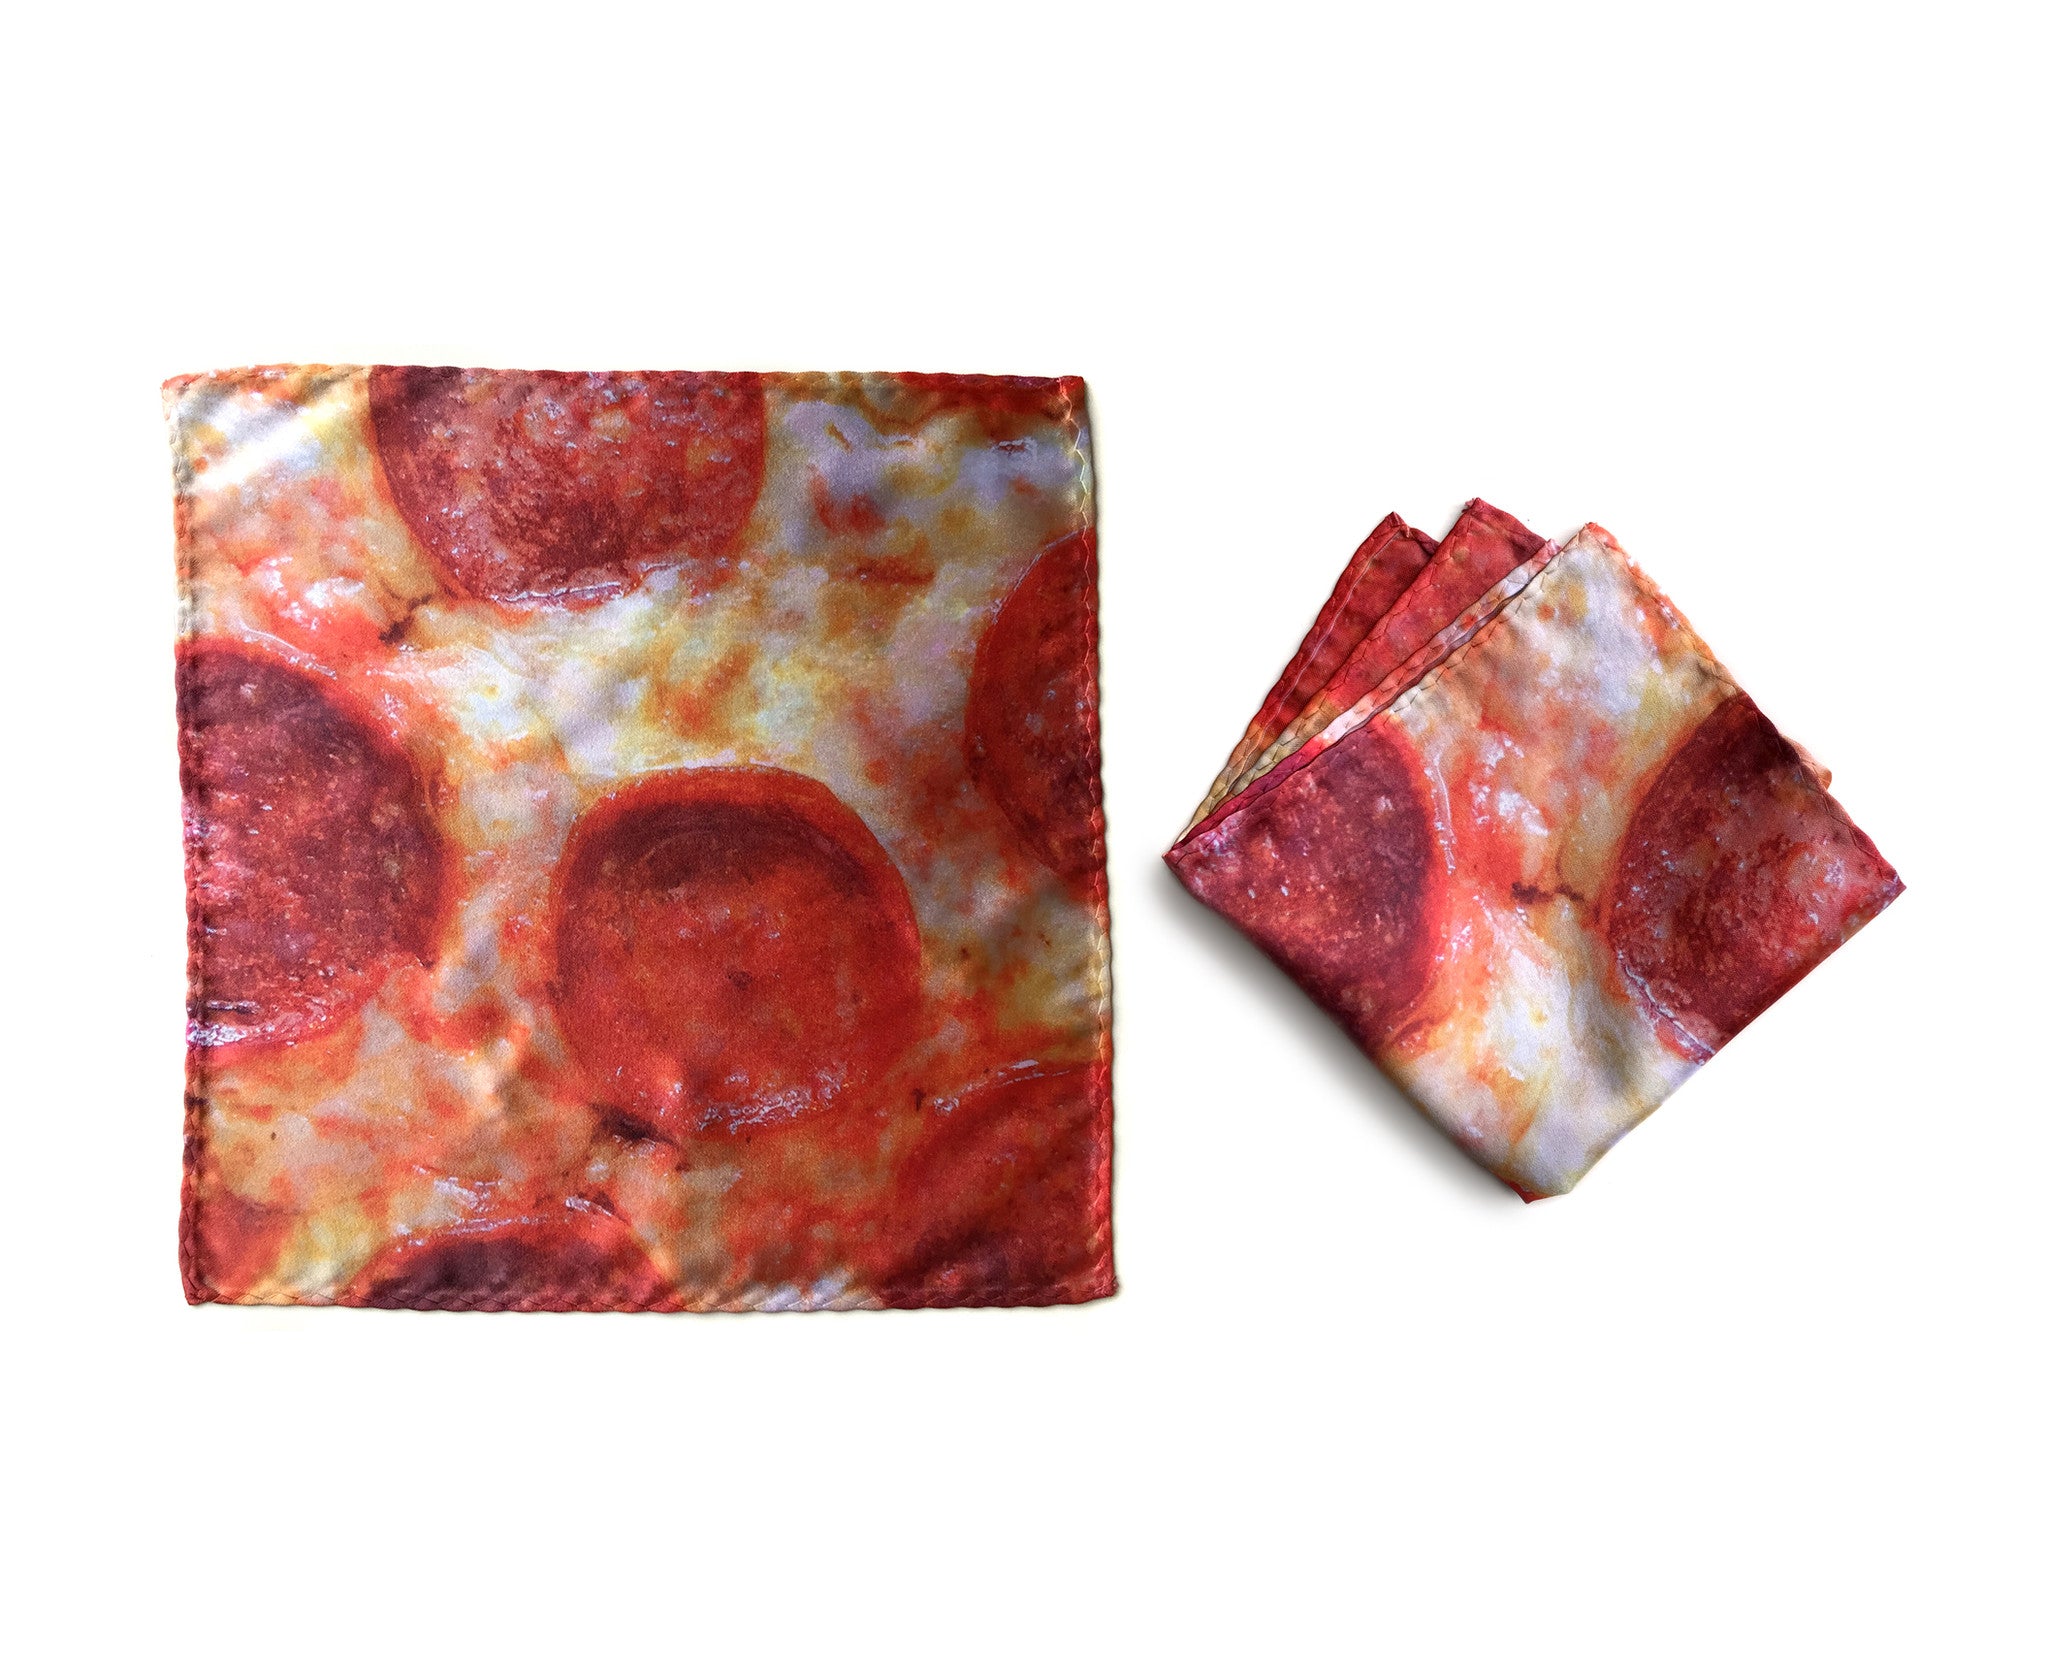 Hot Pockets Frozen Big & Bold Double Pepperoni Pizza - 13.5oz